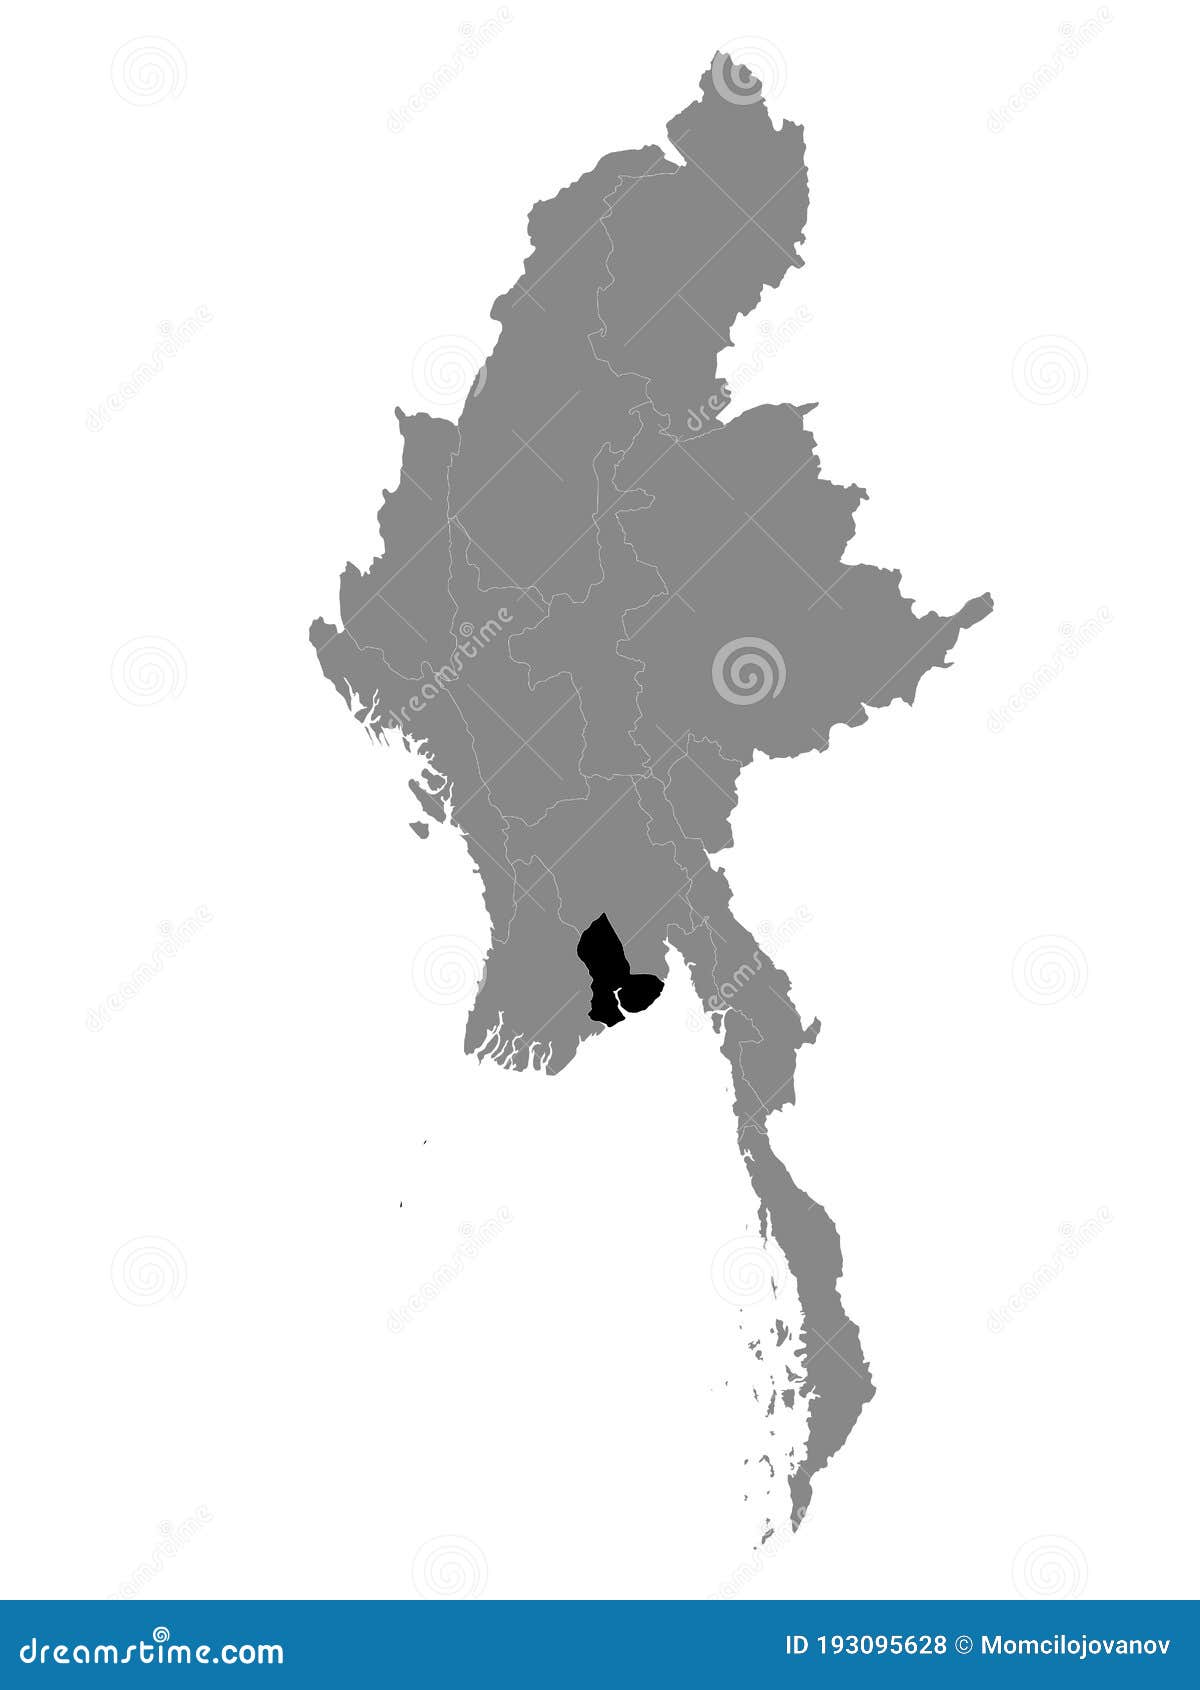 location map of yangon region